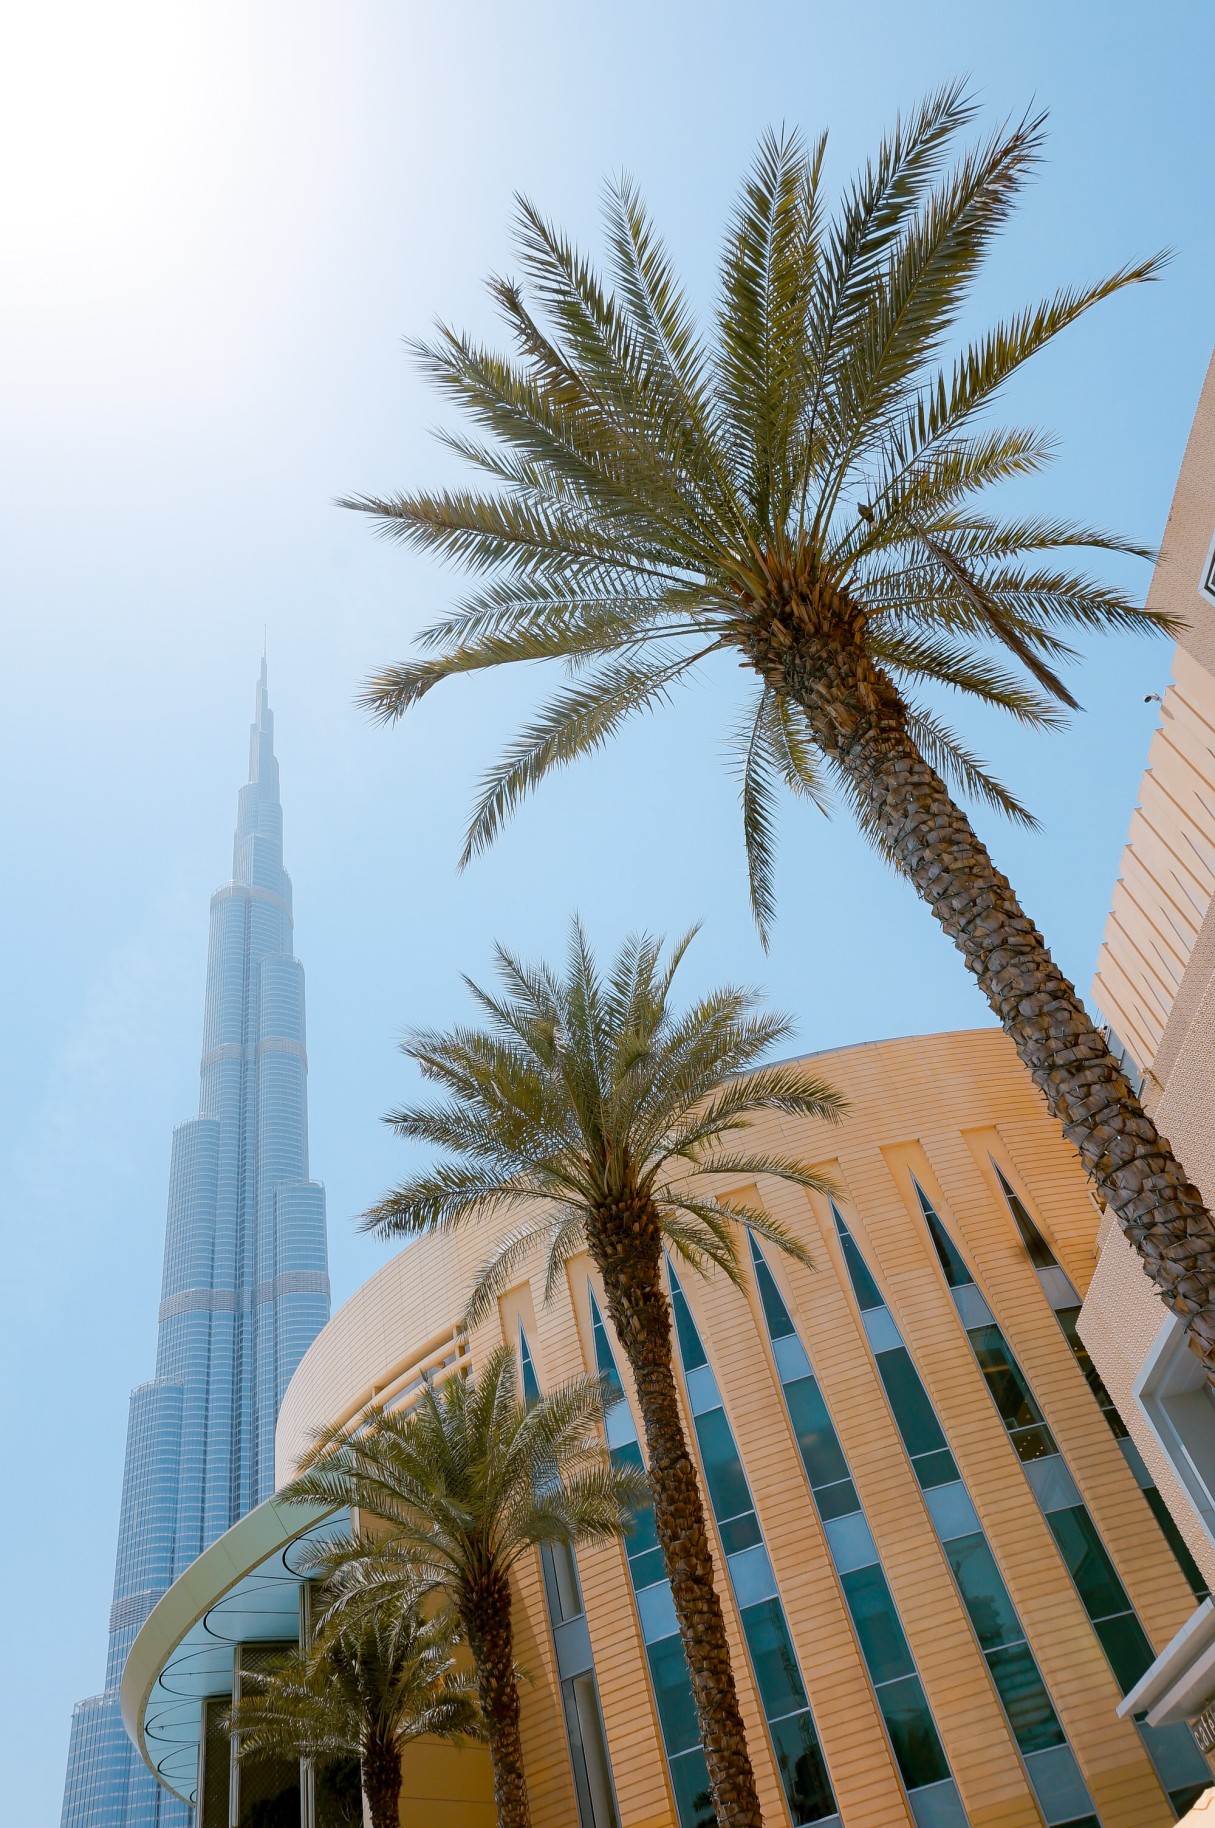 View of palm trees, blue sky and Burj Khalifa building in Dubai